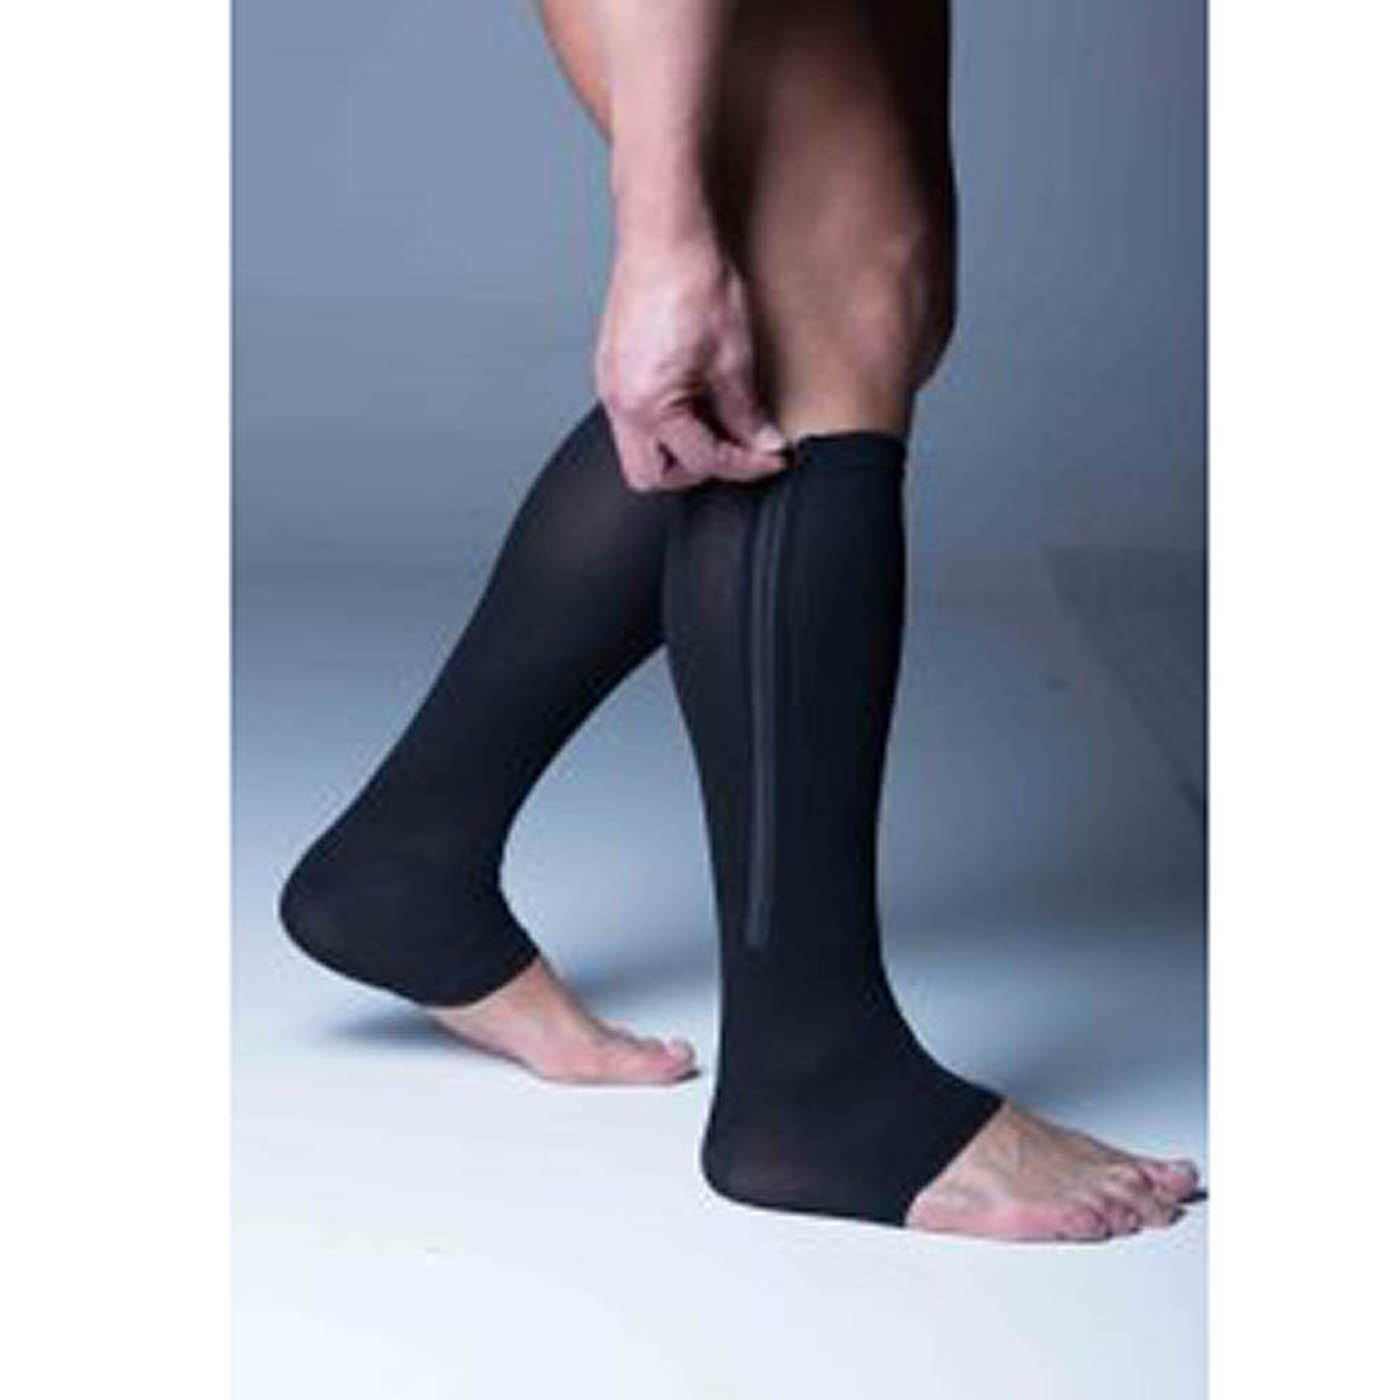 BSN Jobst Unisex Vairox Knee-High Zippered Compression Stockings